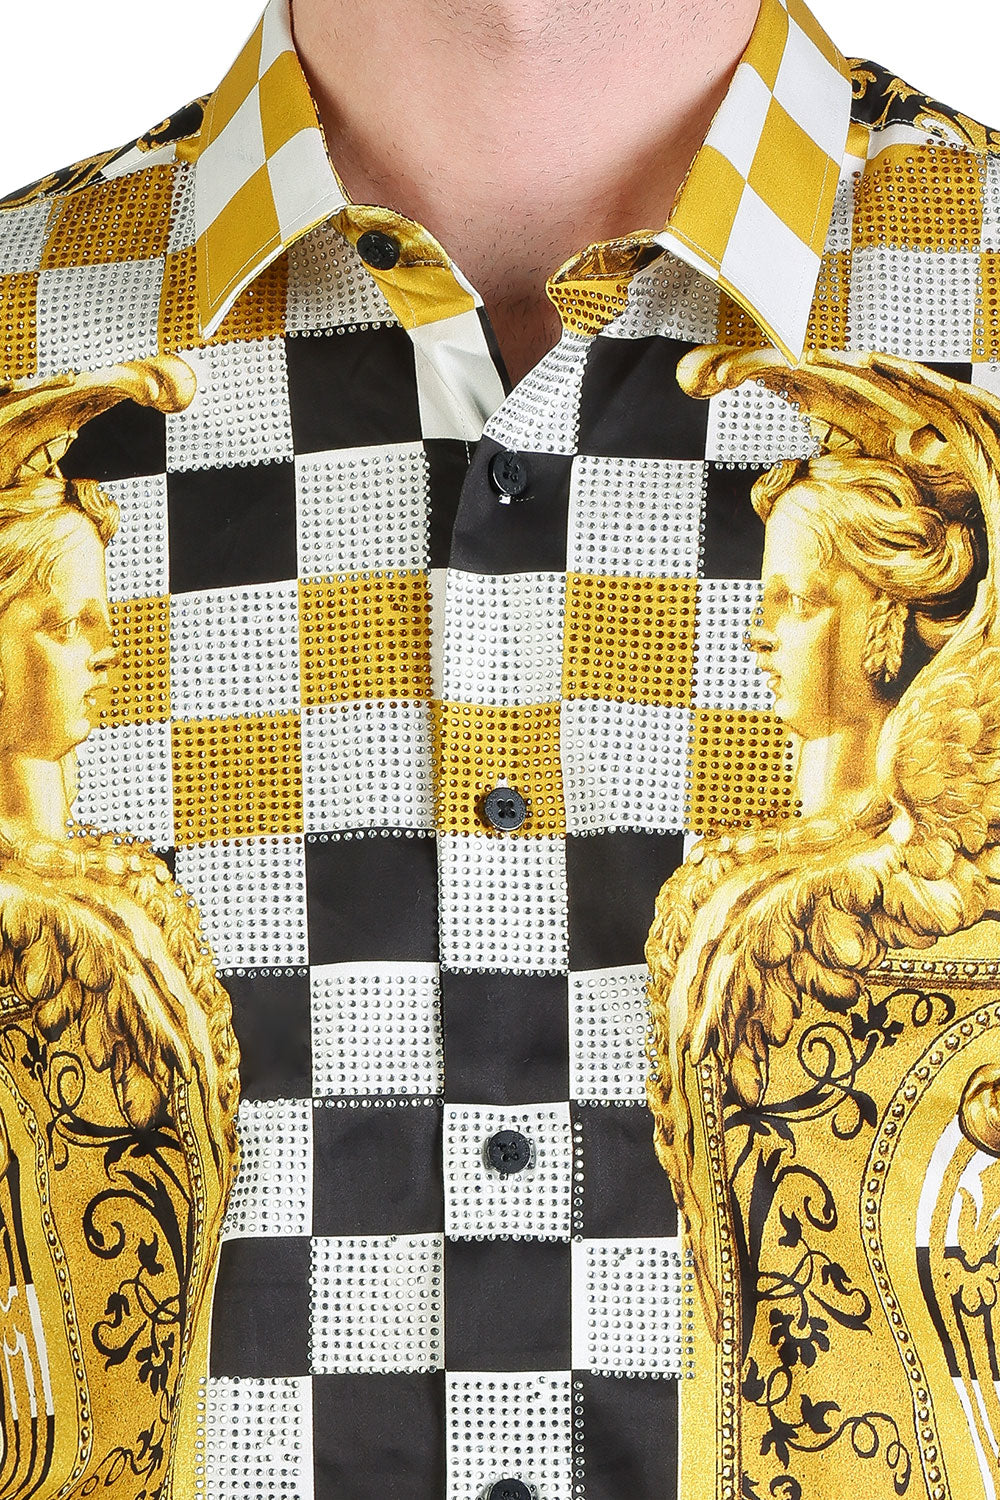 Barabas Men's Baroque Rhinestone Checkered Short Sleeve Shirts SSR20 gold black